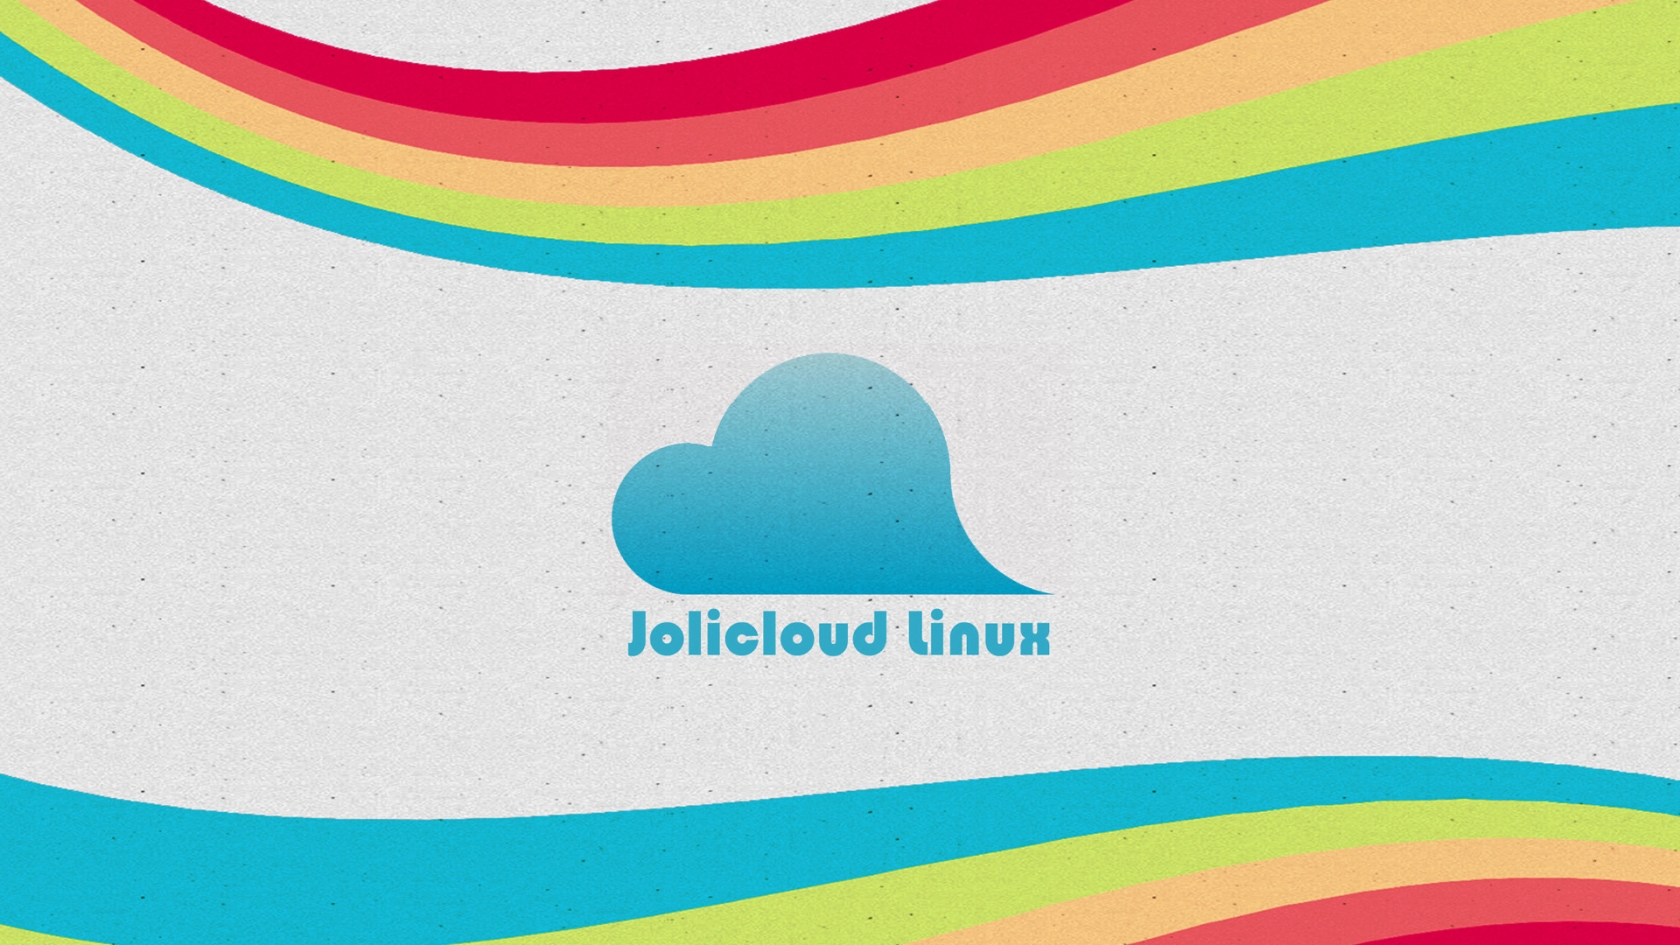 Jolicloud Linux for 1680 x 945 HDTV resolution